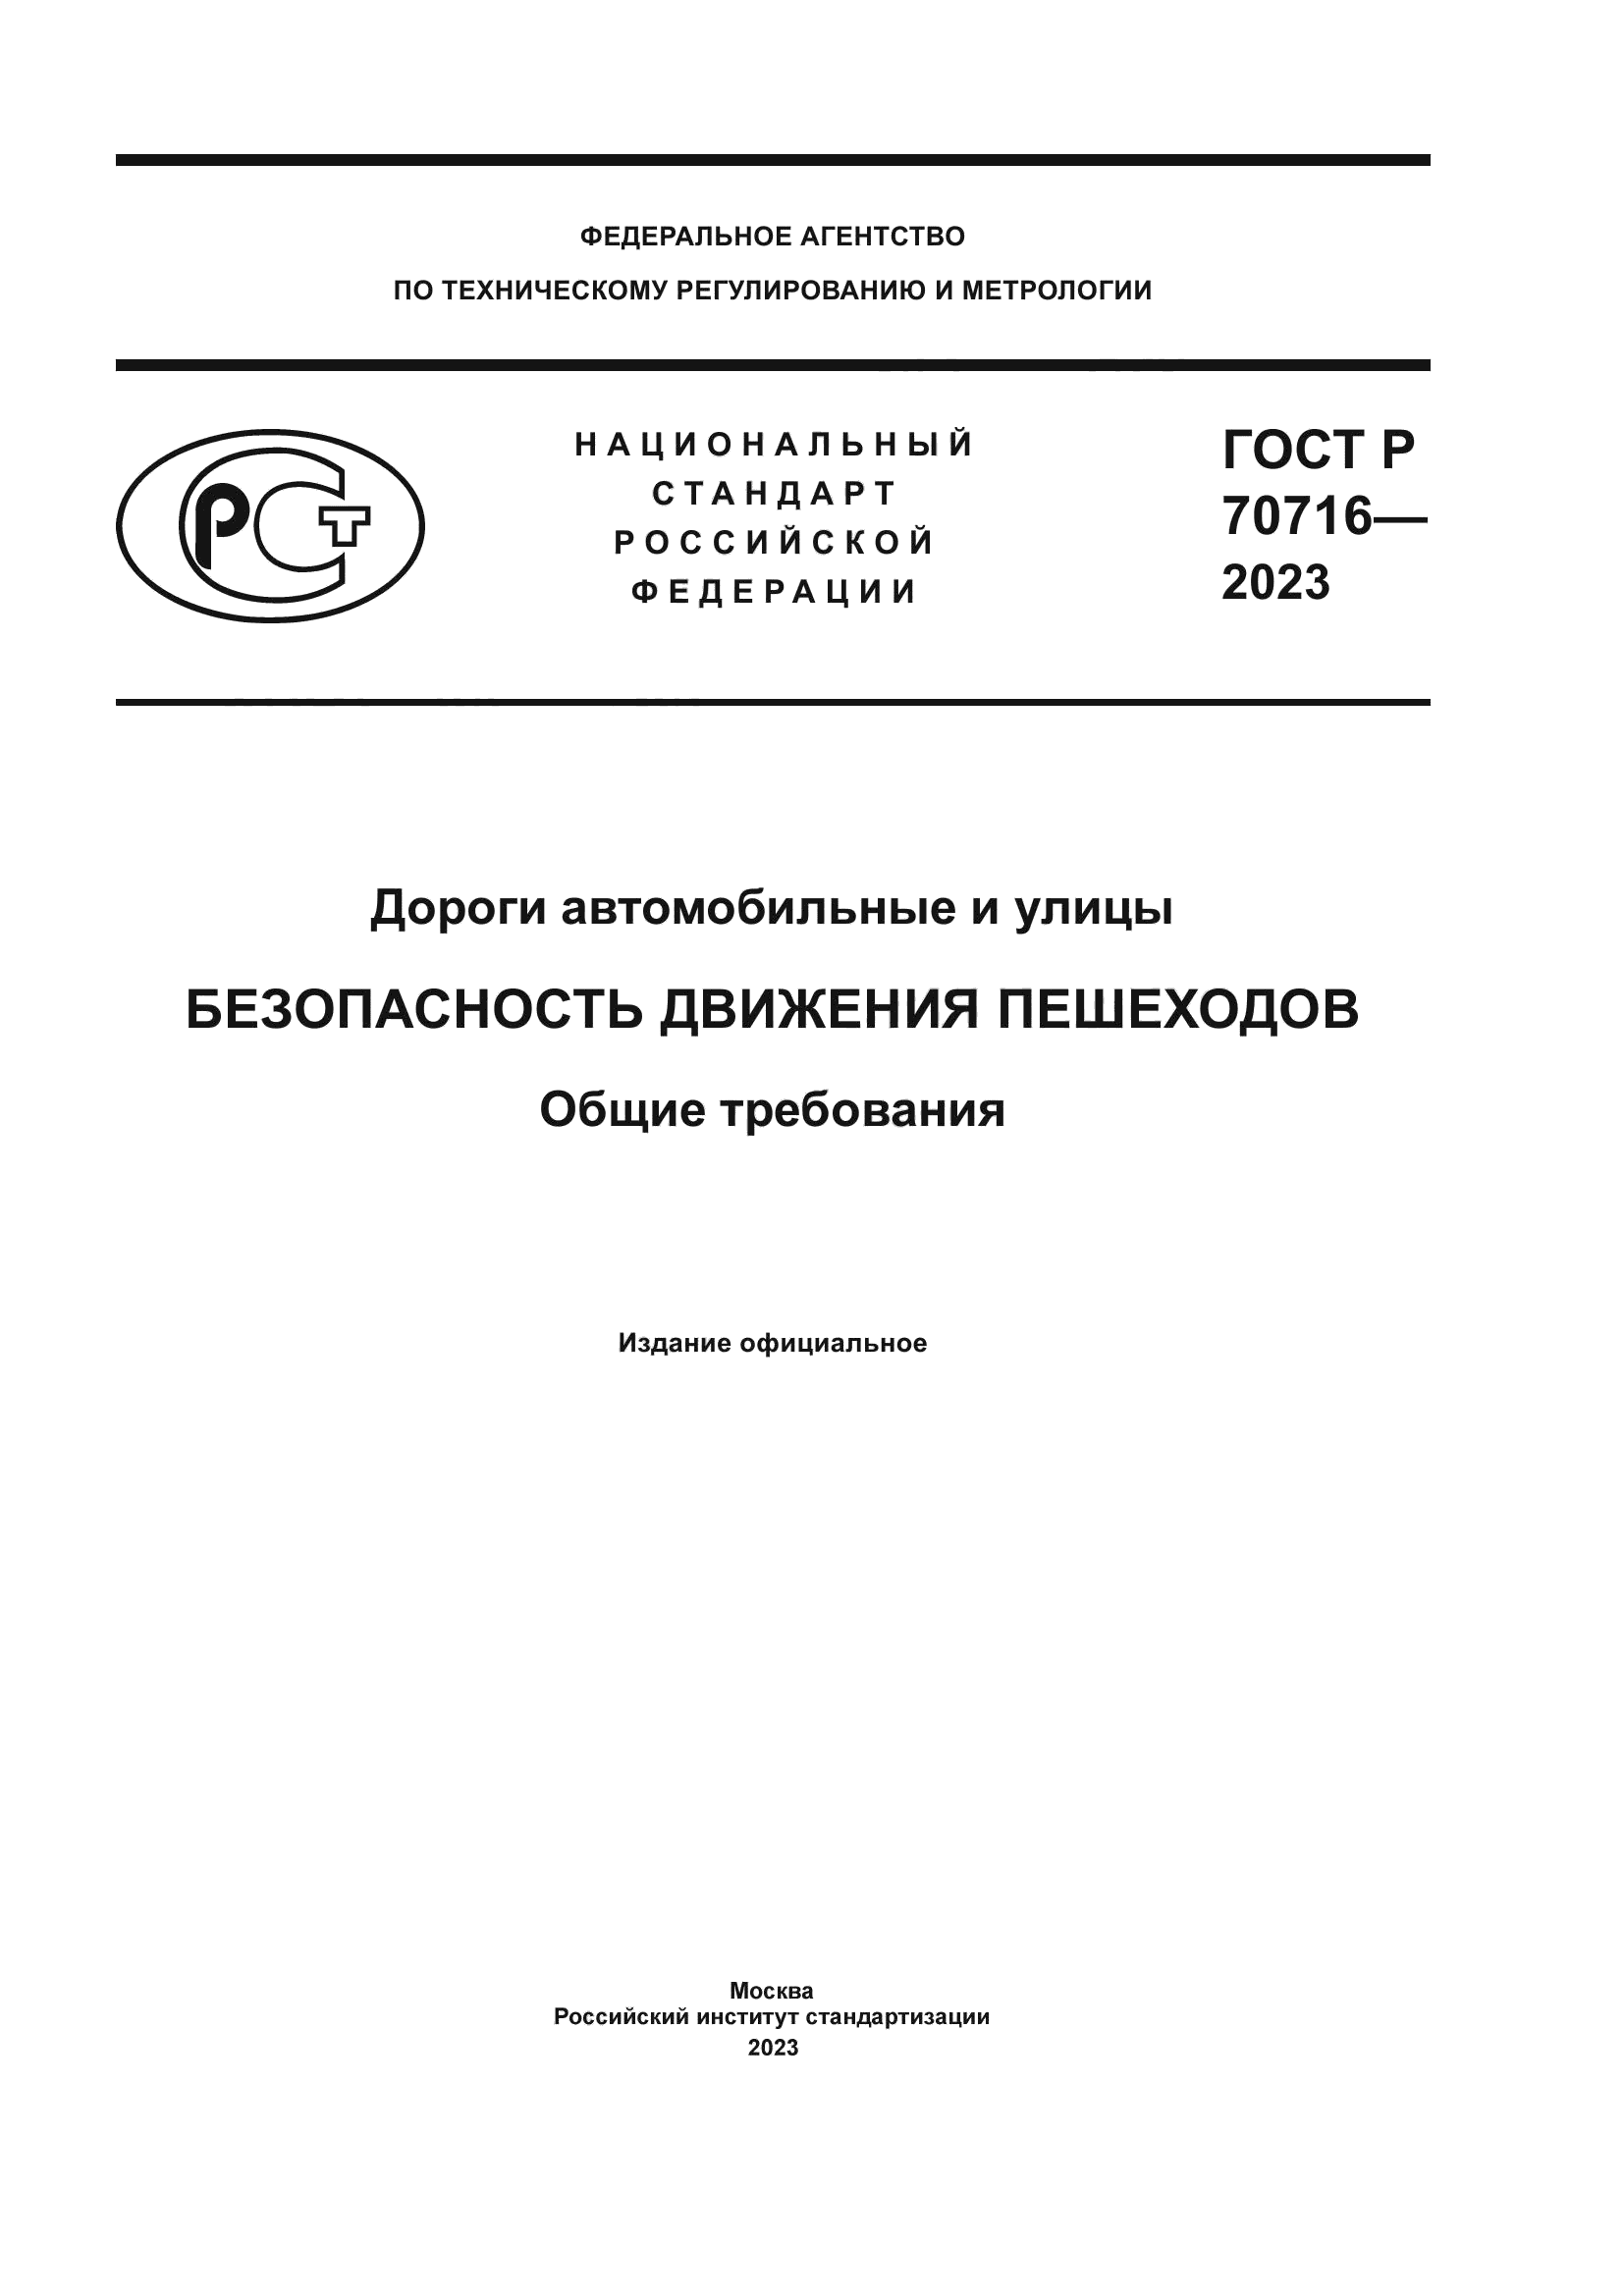 ГОСТ Р 70716-2023